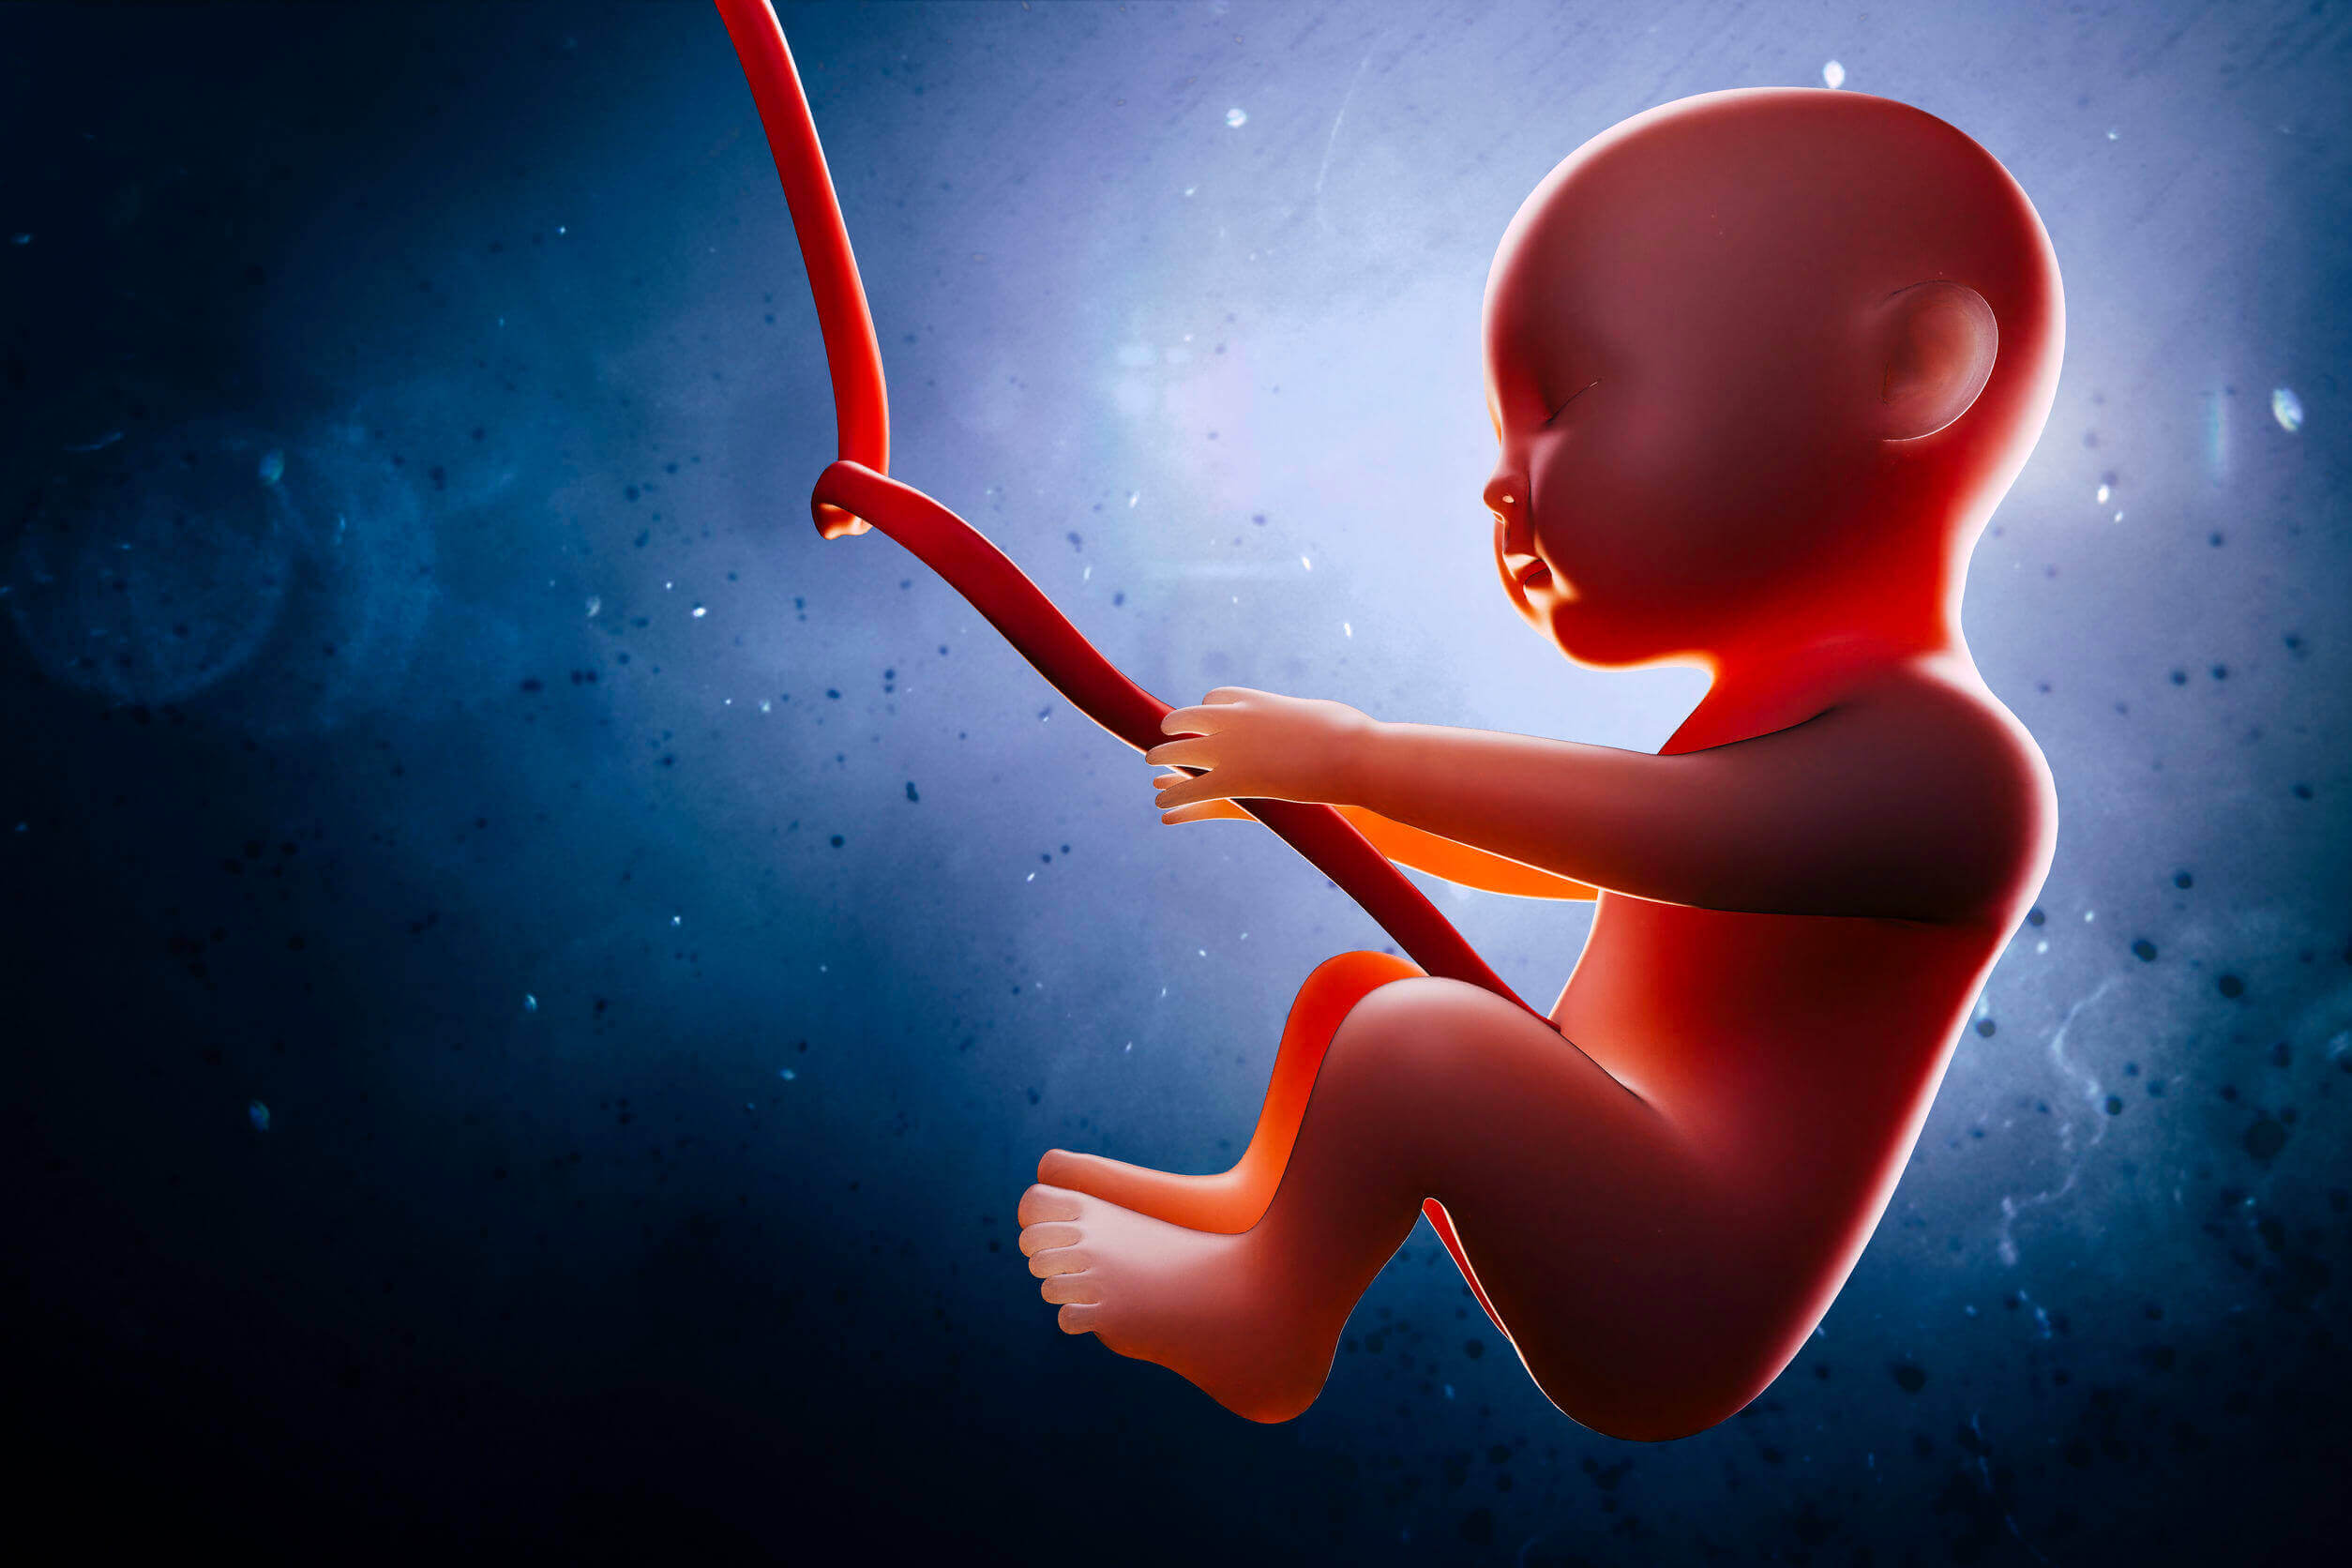 A fetus floating in amniotic fluid.